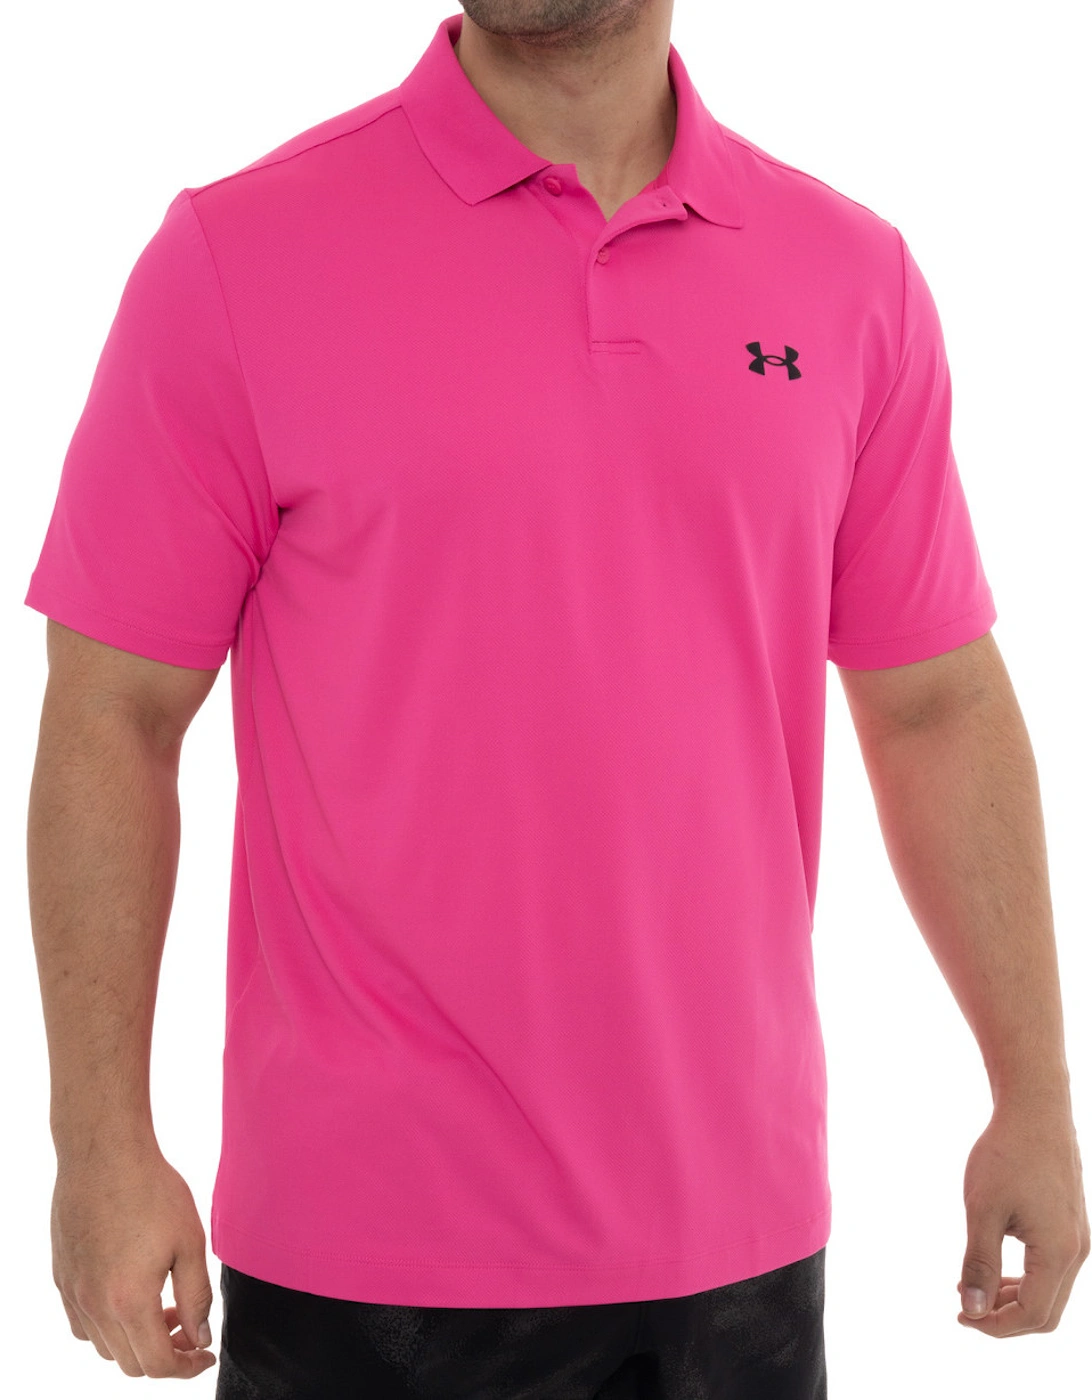 Mens Performance Polo Shirt (Pink)